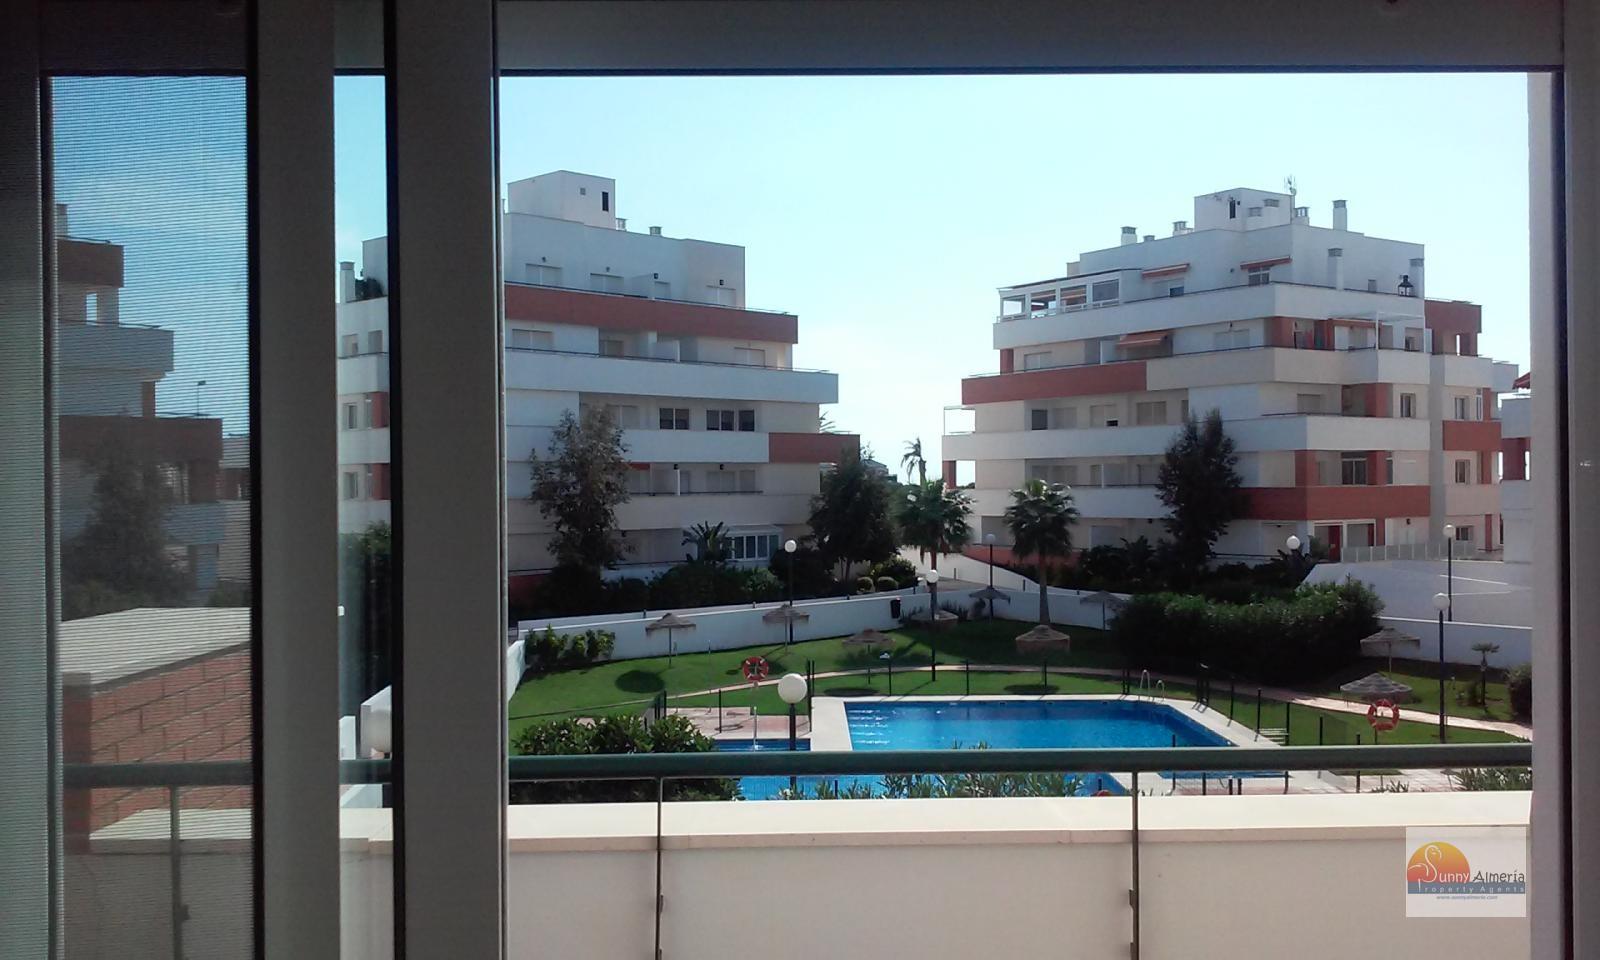 Luxury Apartment for rent in Carretera Ciudad de Cadiz 1A (Roquetas de Mar), 950 €/month